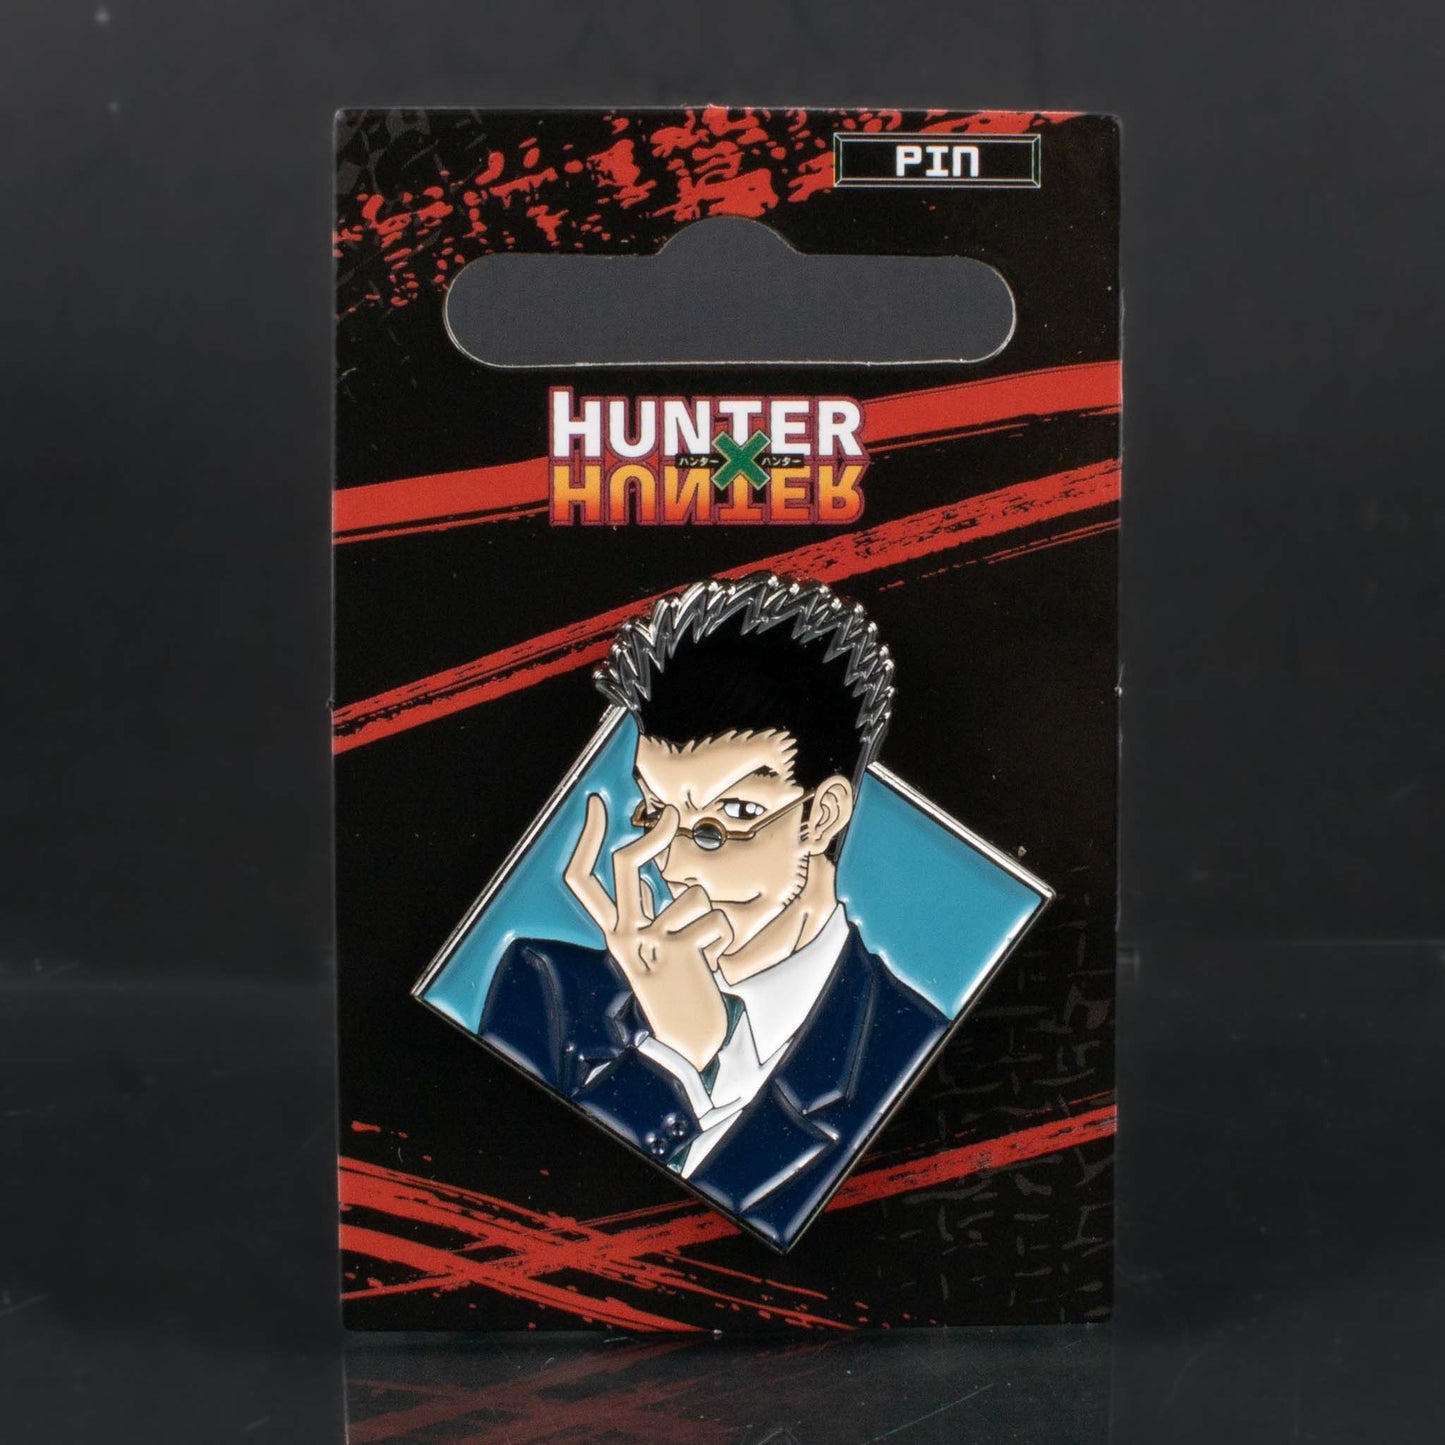 Leorio Paradinight, Hunter × Hunter Book!